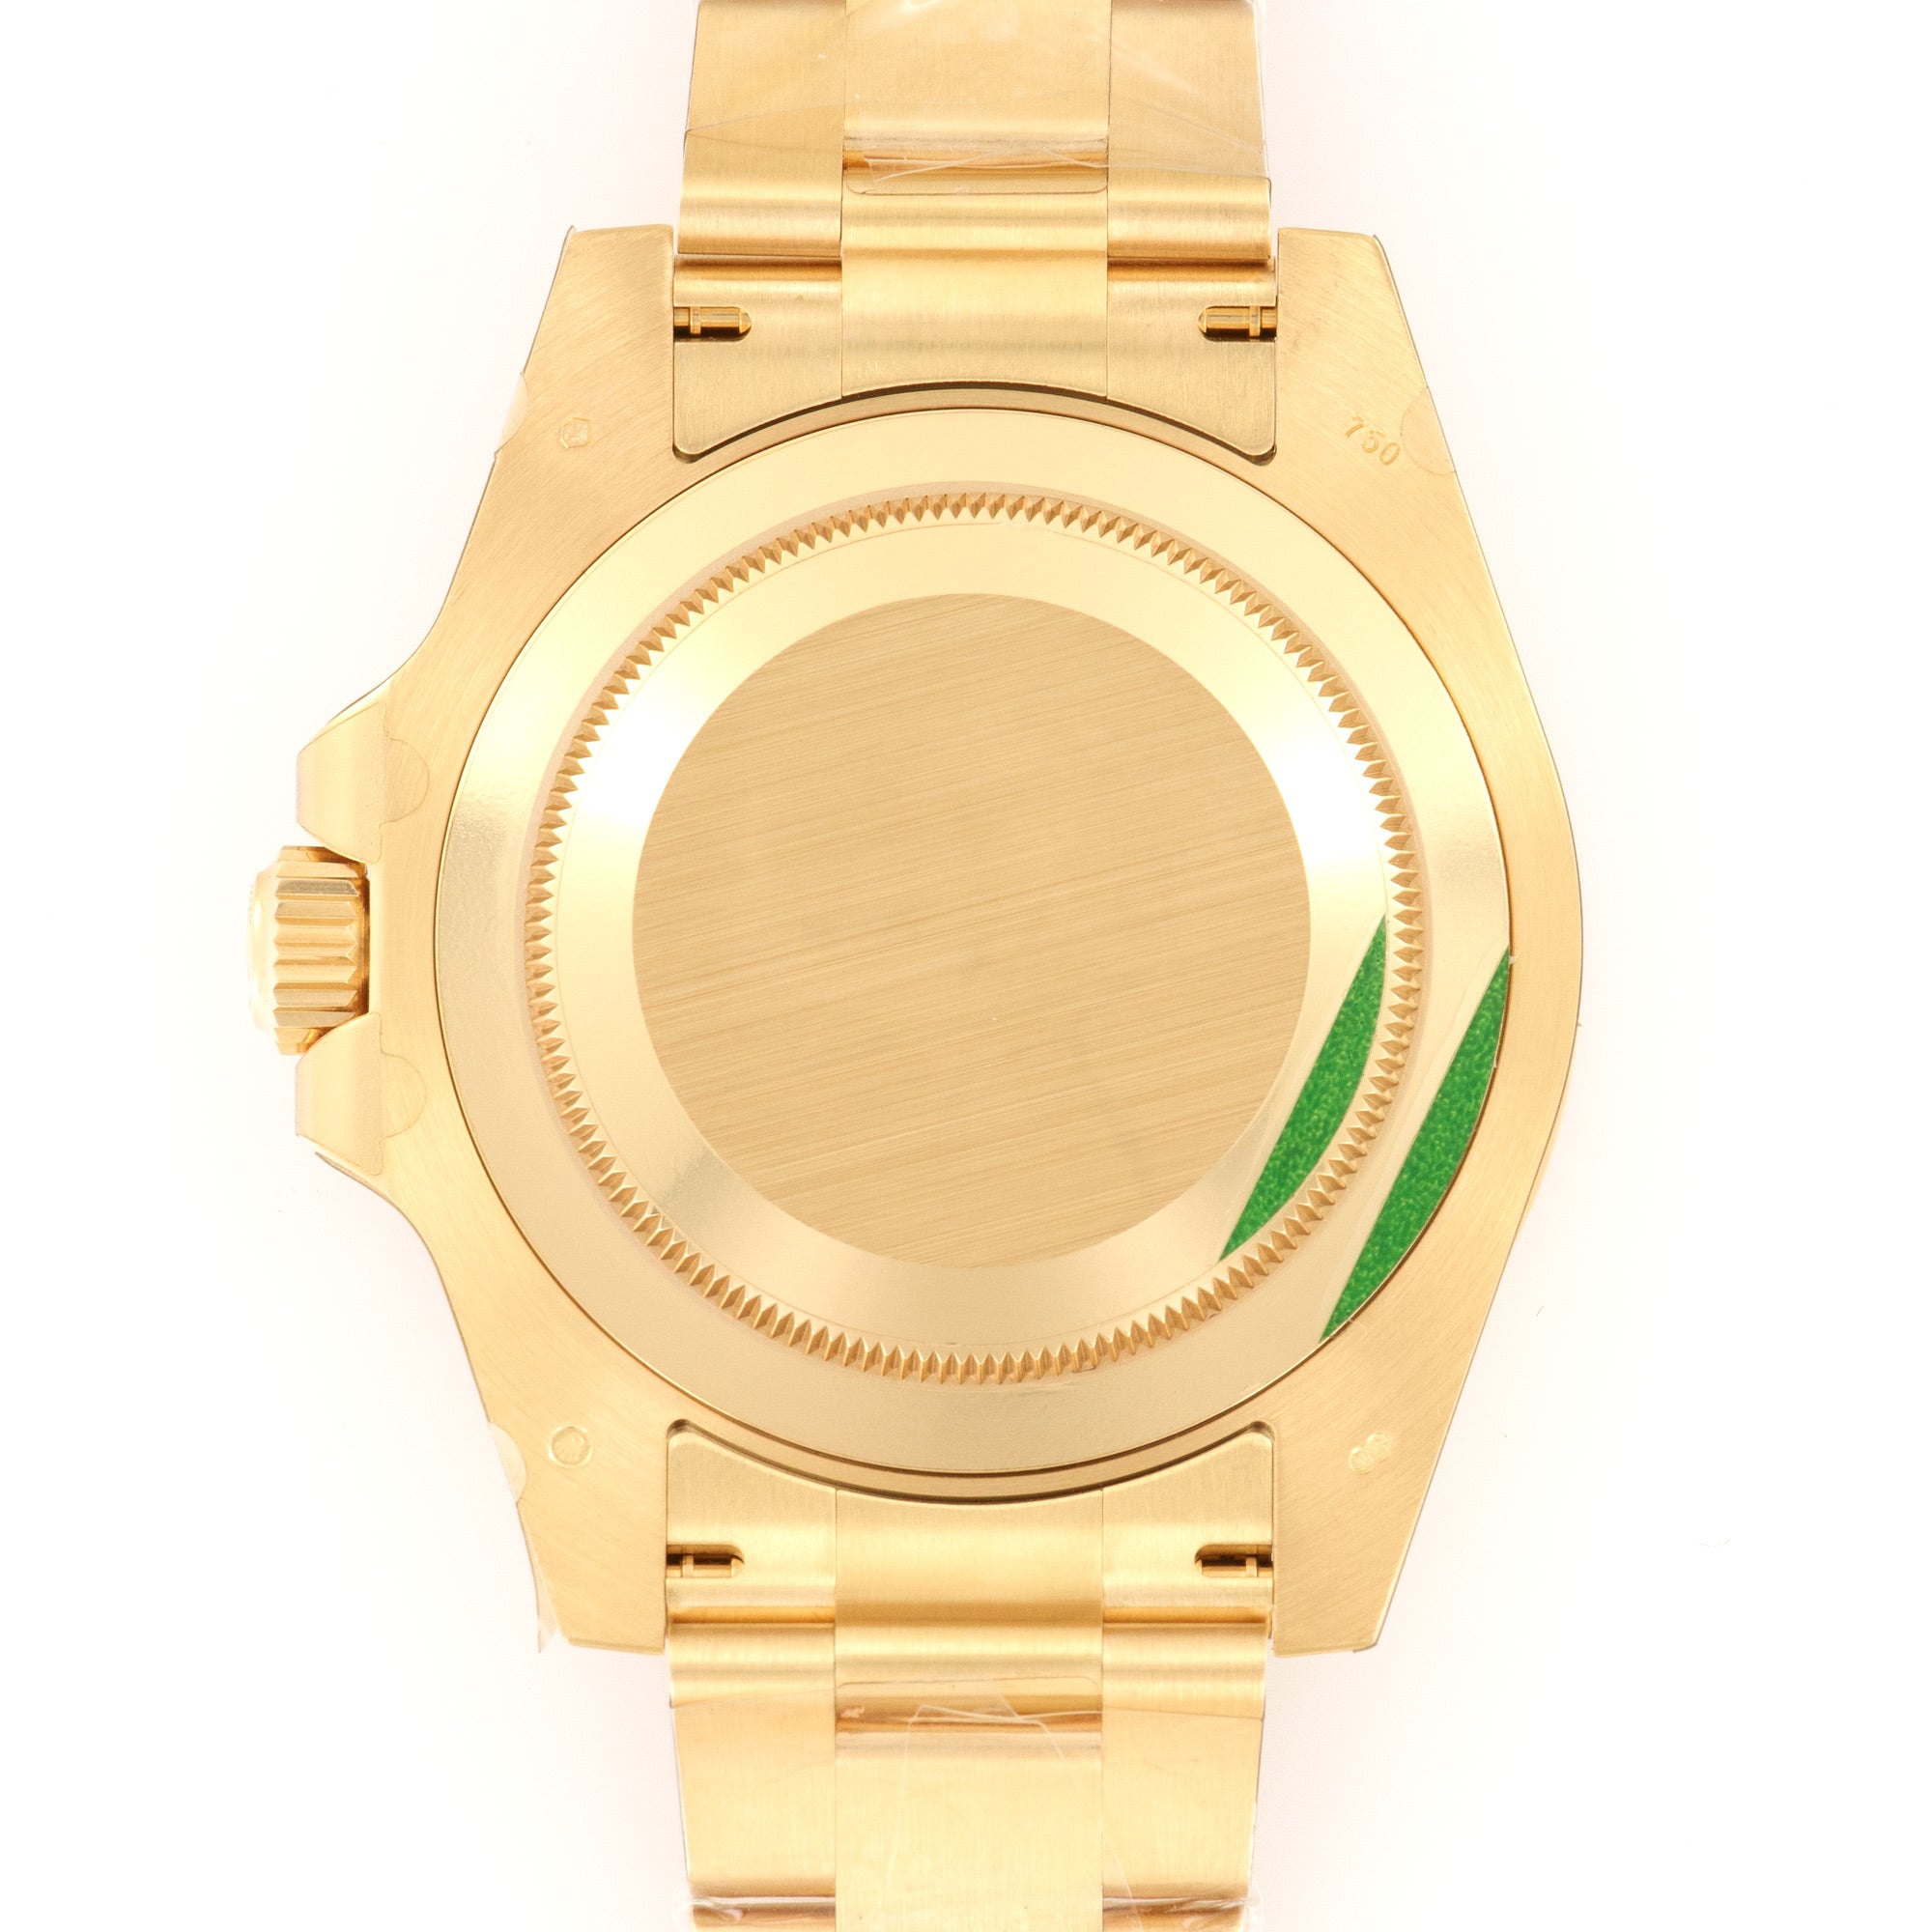 Rolex - Rolex Yellow Gold GMT-Master II Sapphire Ruby Watch Ref. 116748 in Unworn Condition - The Keystone Watches